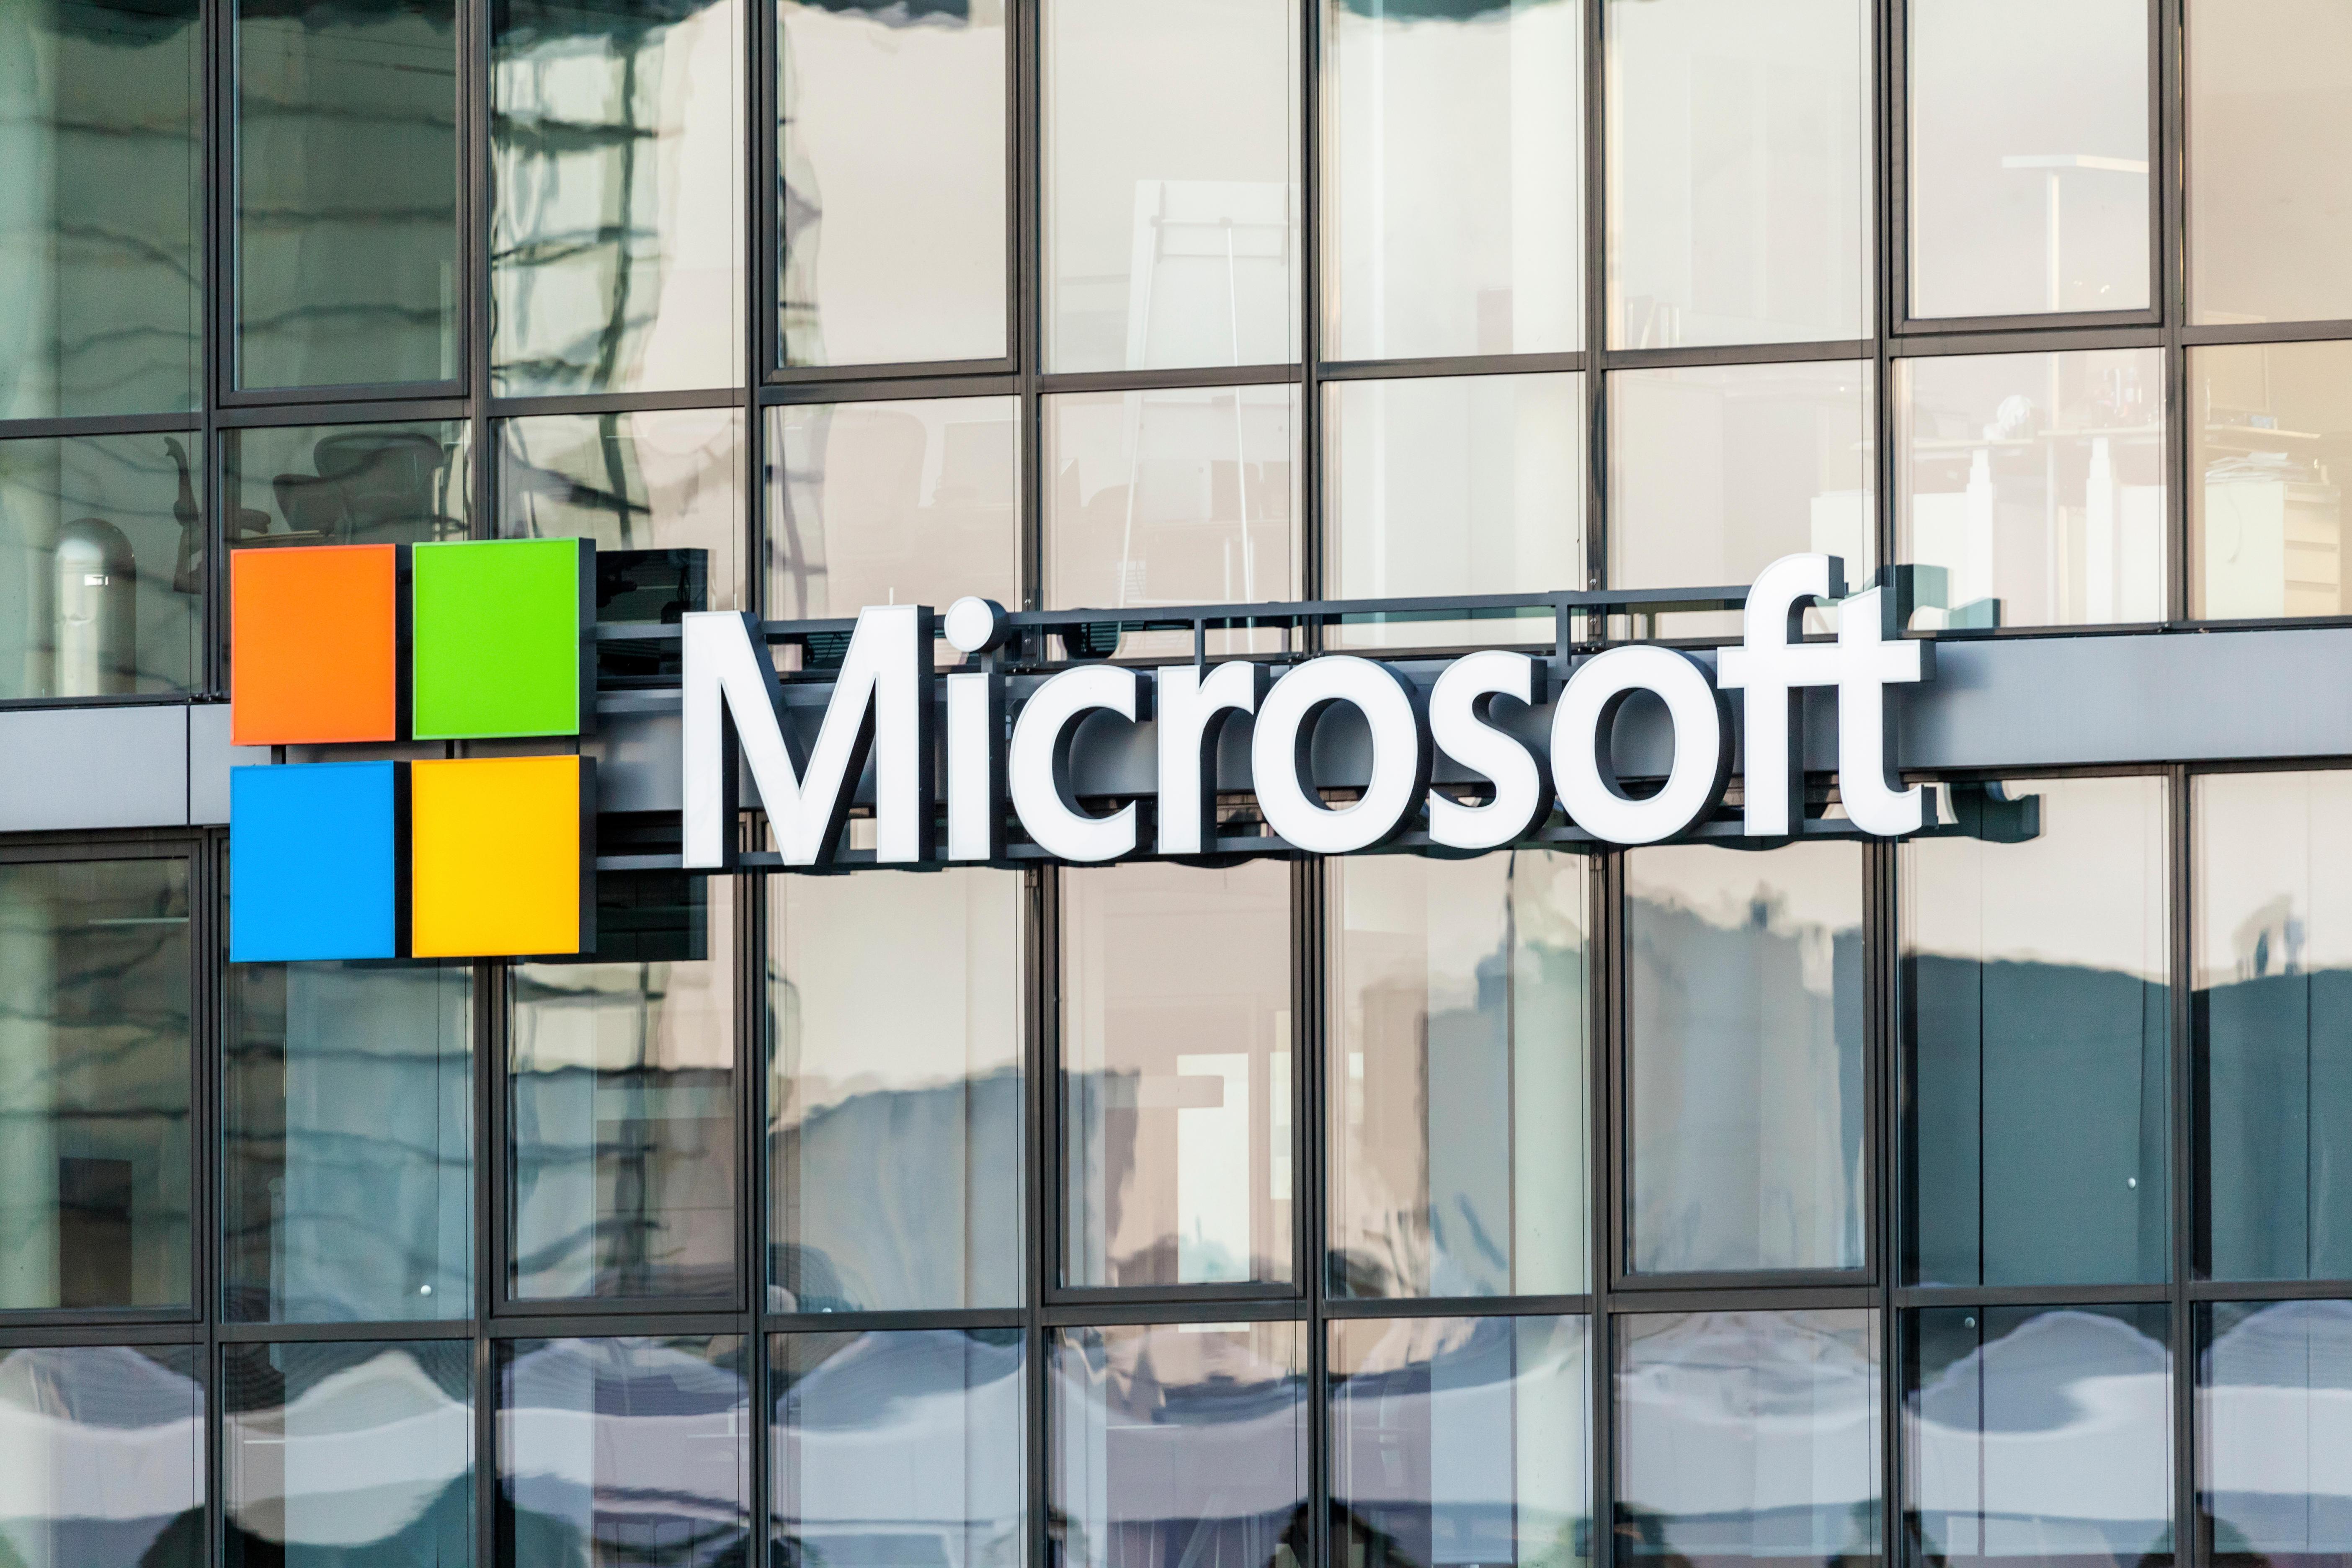  Microsoft mengatakan pihaknya mengumpulkan dan memproses data obrolan sehingga dapat meningkatkan layanan